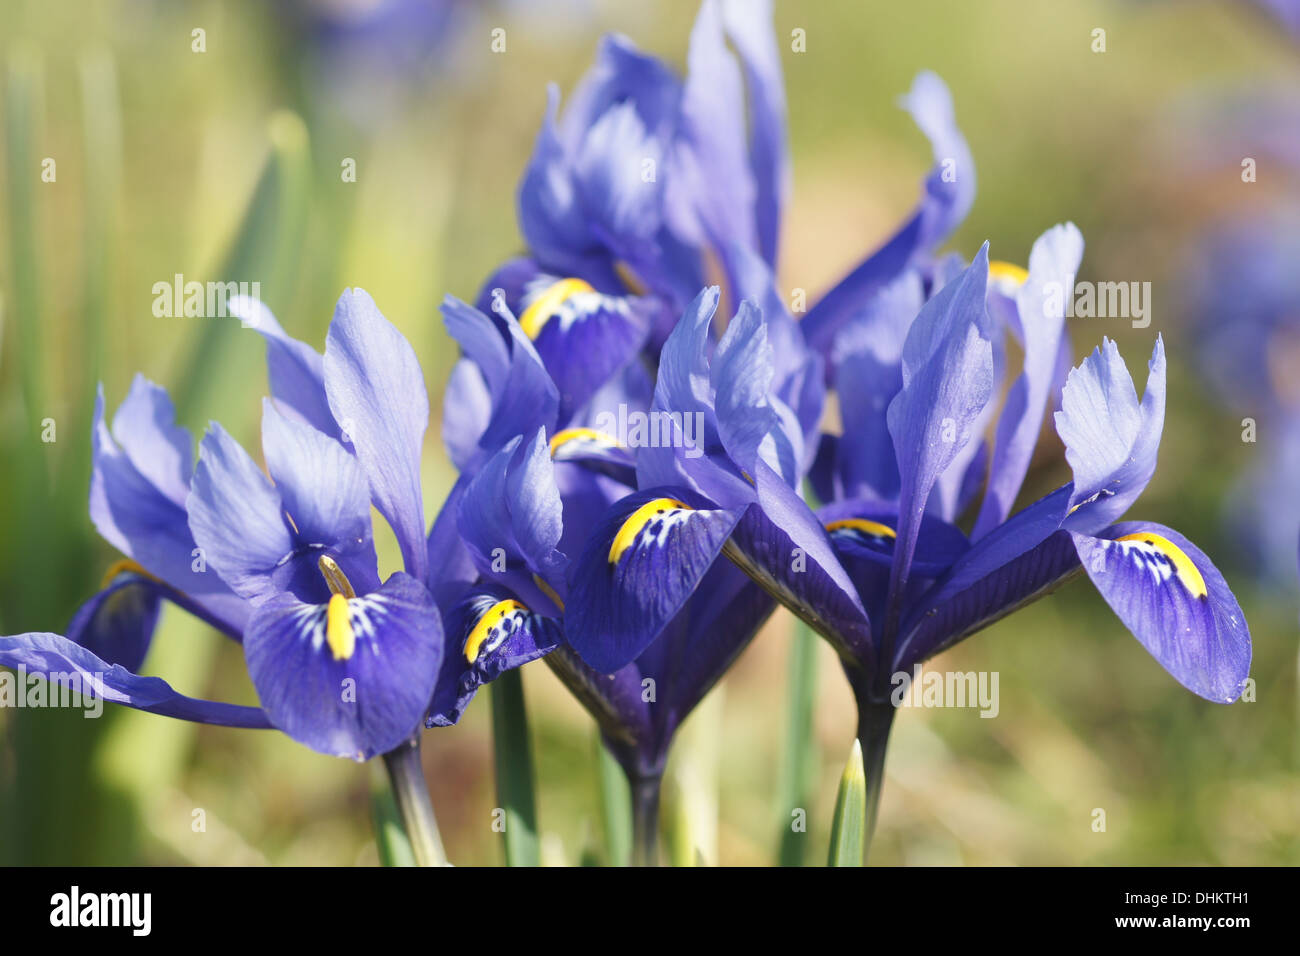 Dwarf irises Stock Photo